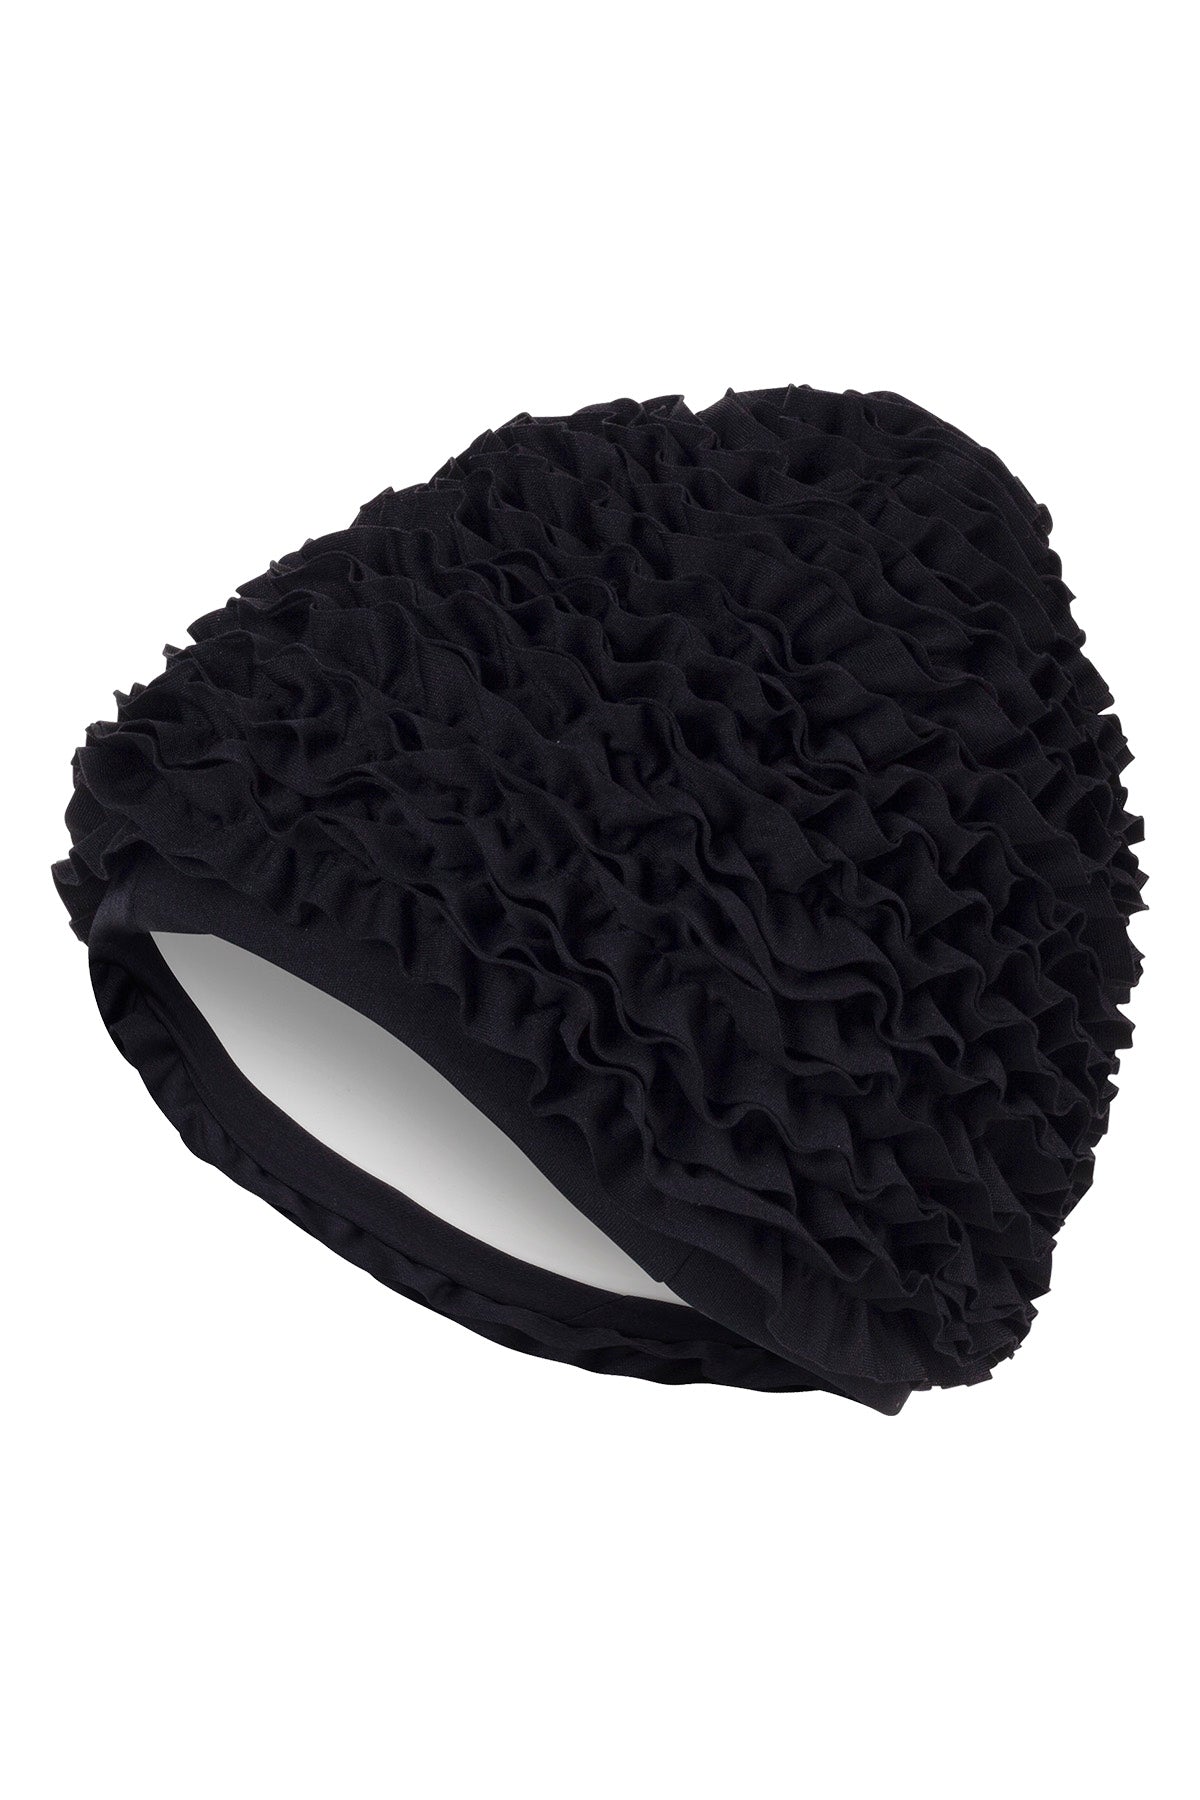 Fashy Ladies Swim Cap - Frill Swim Hat Black - One Size